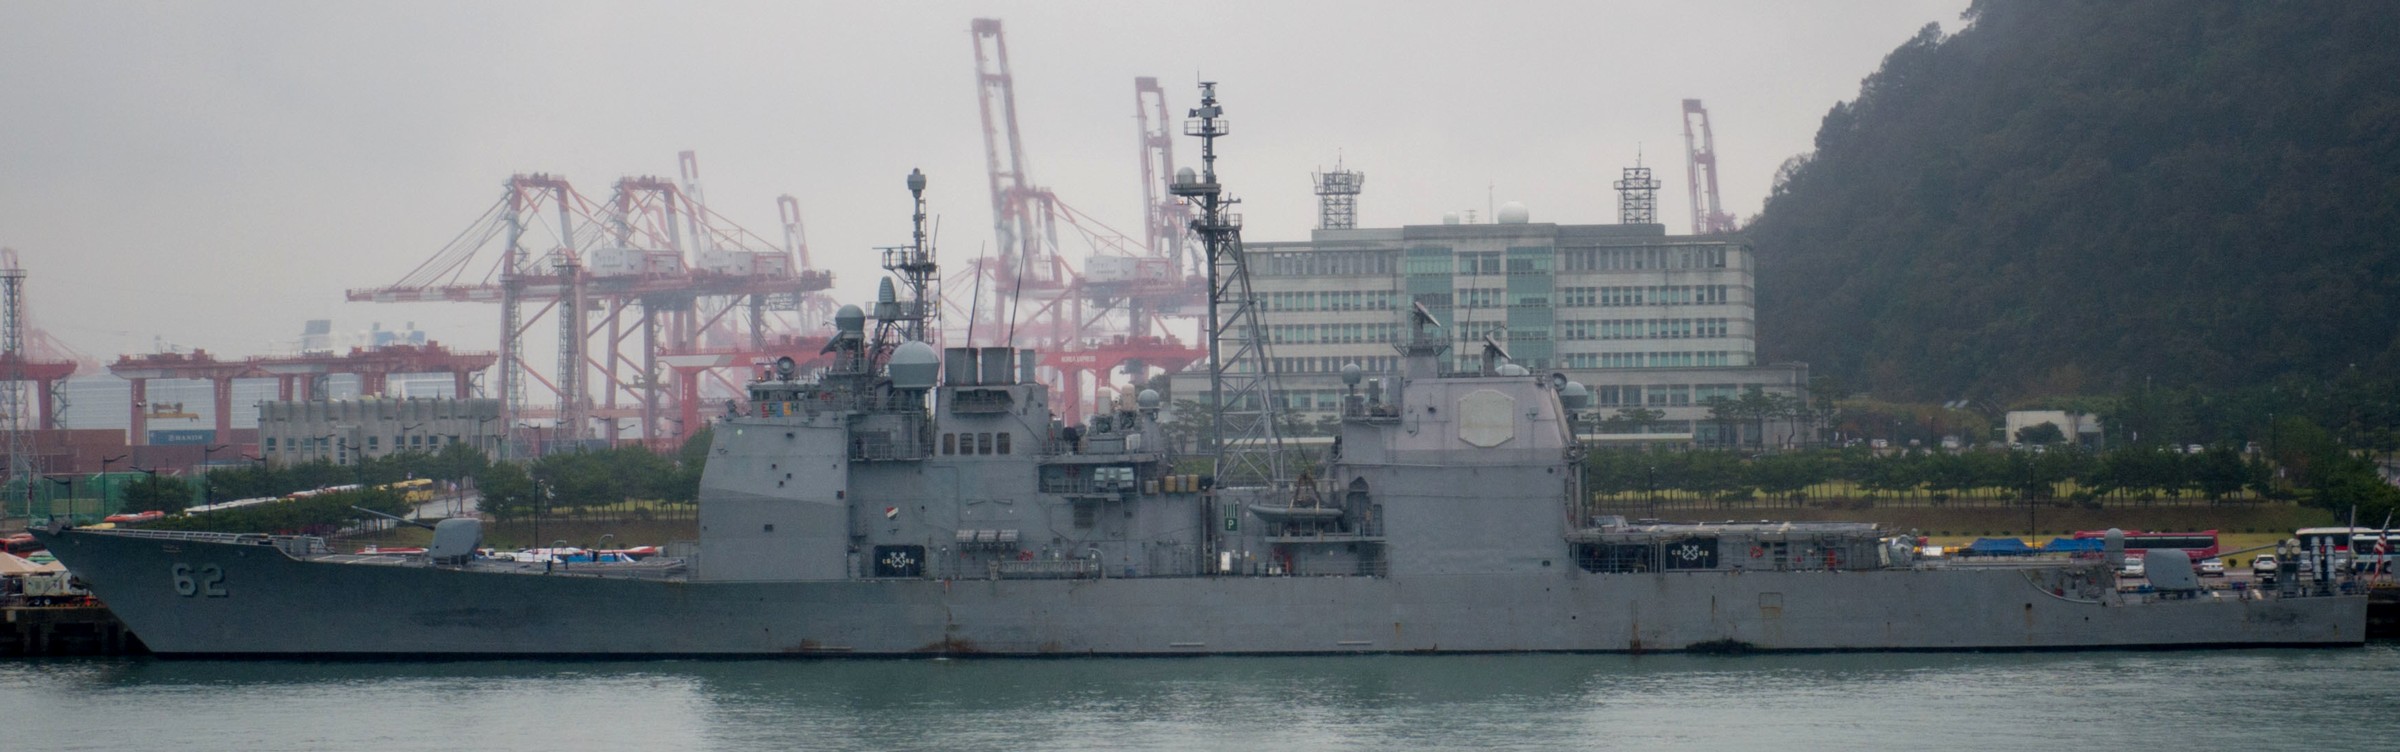 cg-62 uss chancellorsville ticonderoga class guided missile cruiser aegis us navy busan korea 65